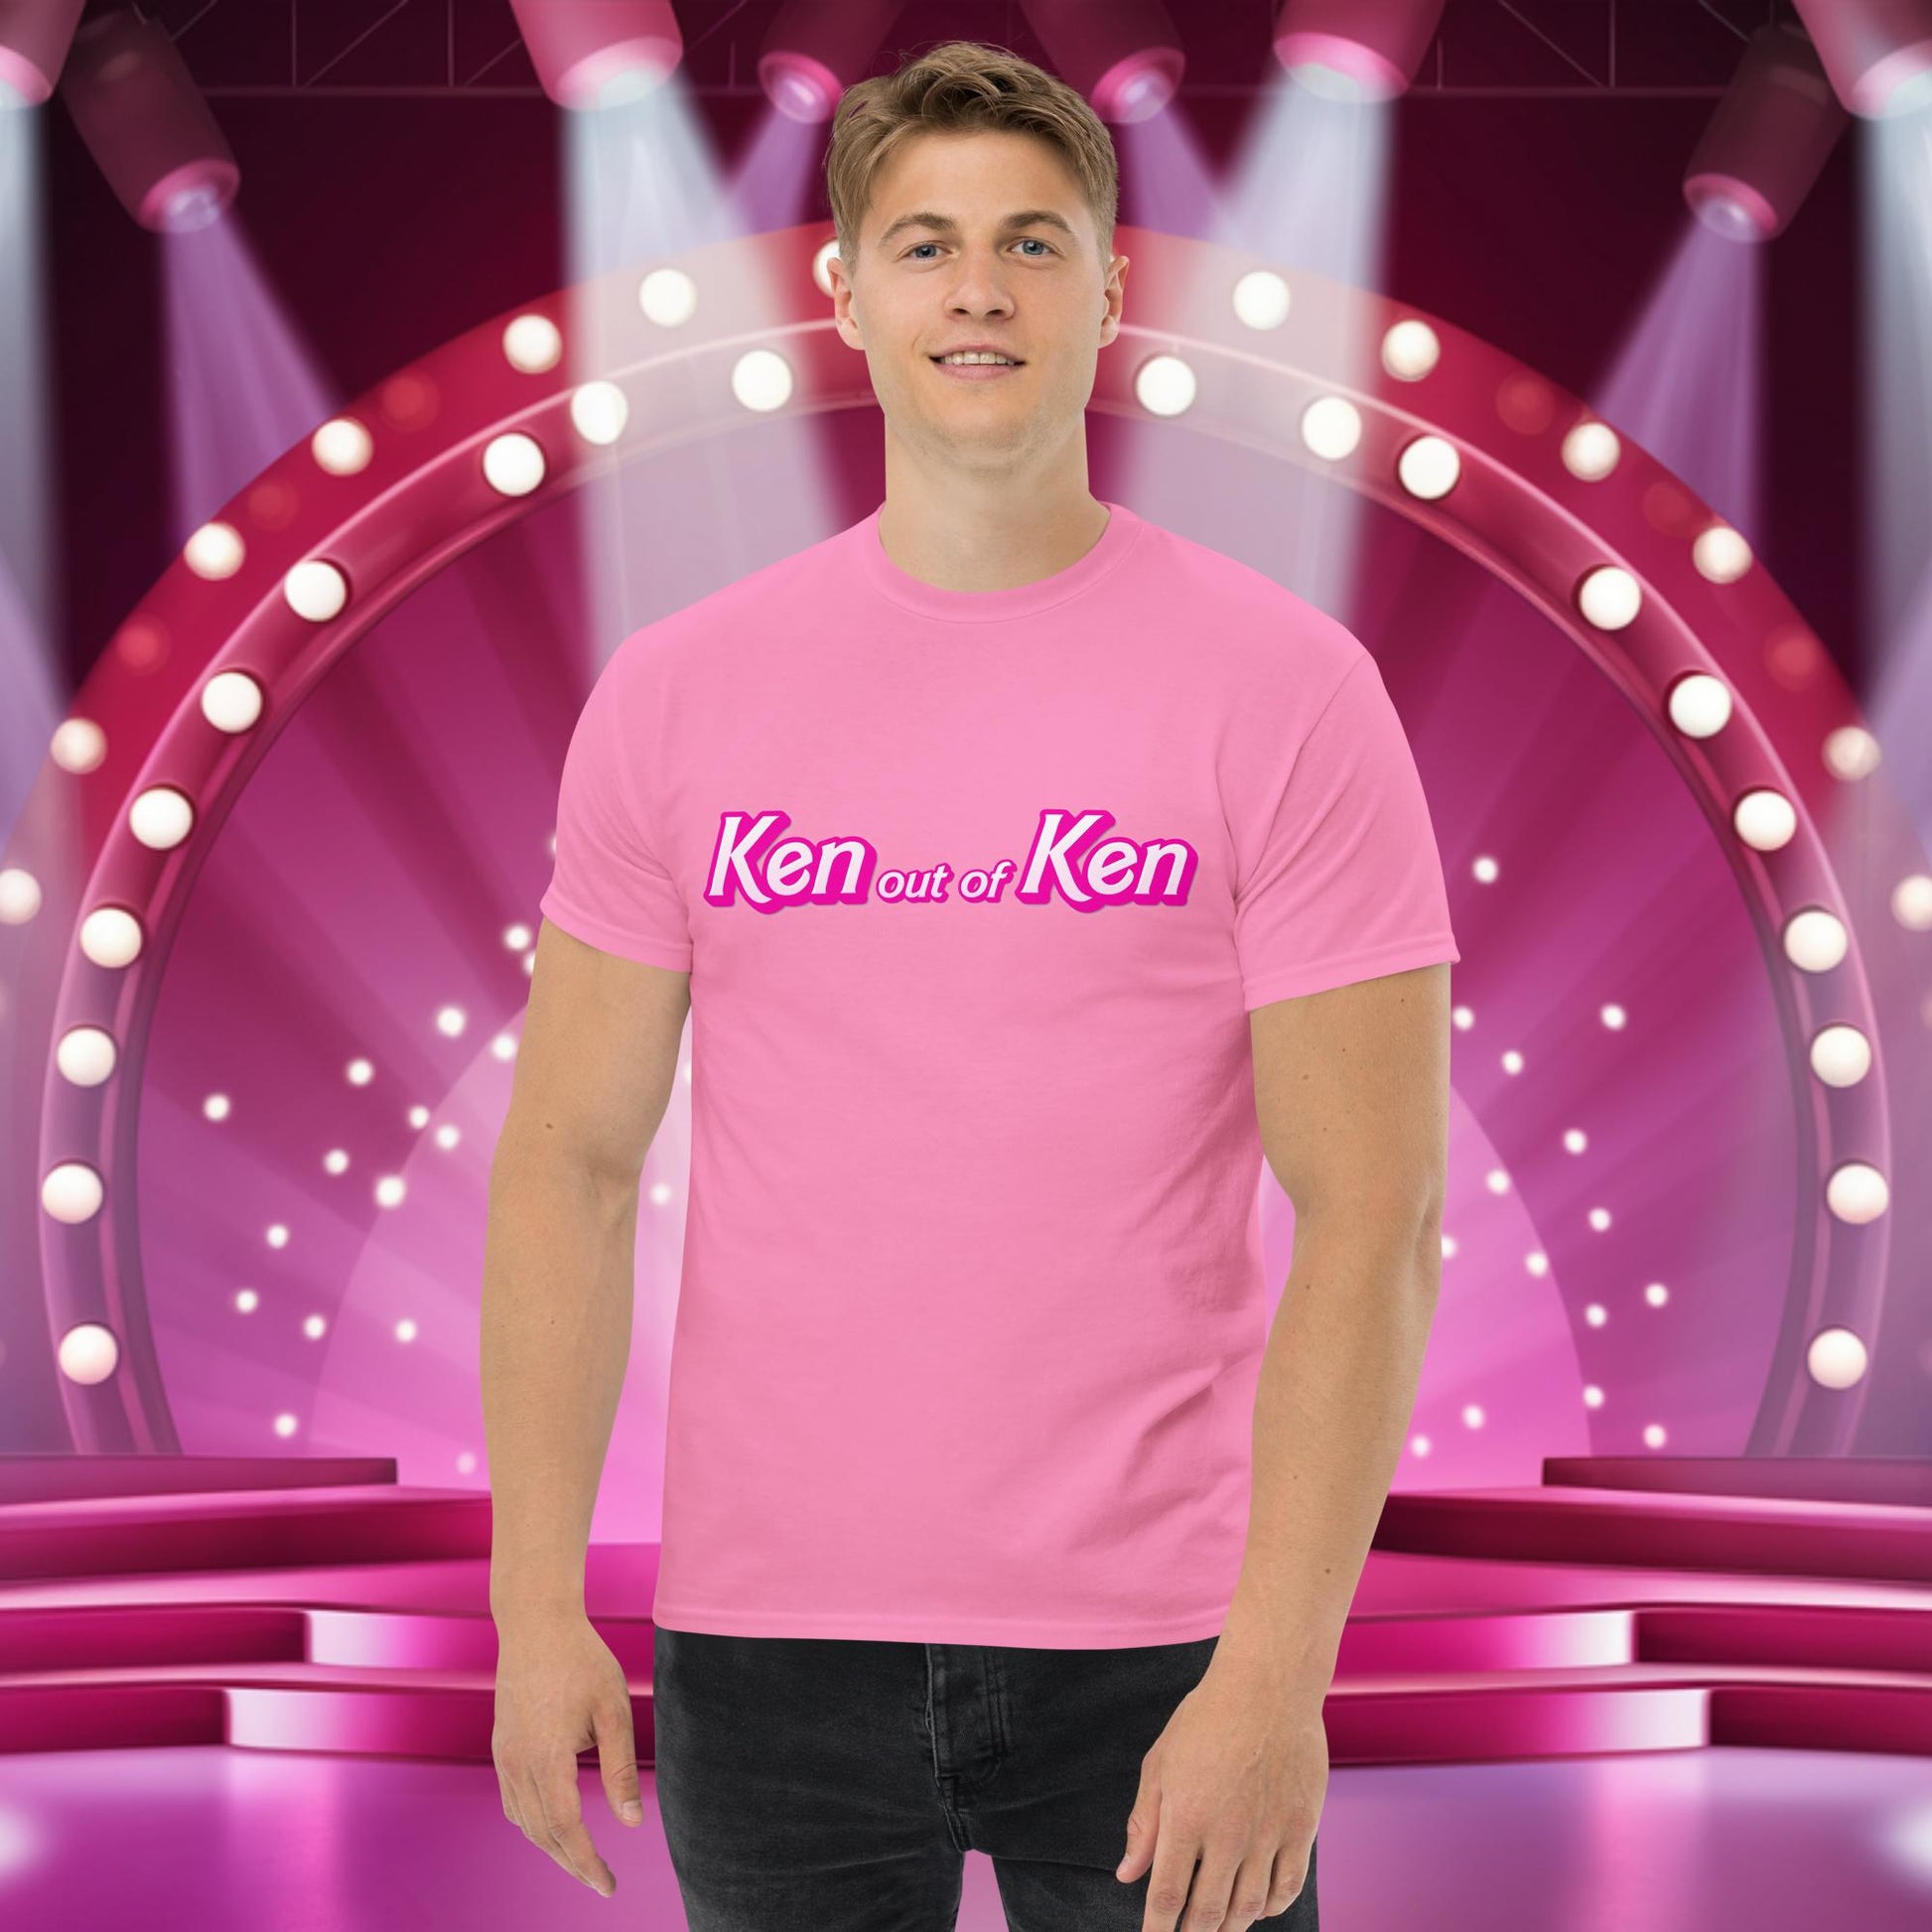 Ken out of Ken Barbie Movie tee Next Cult Brand